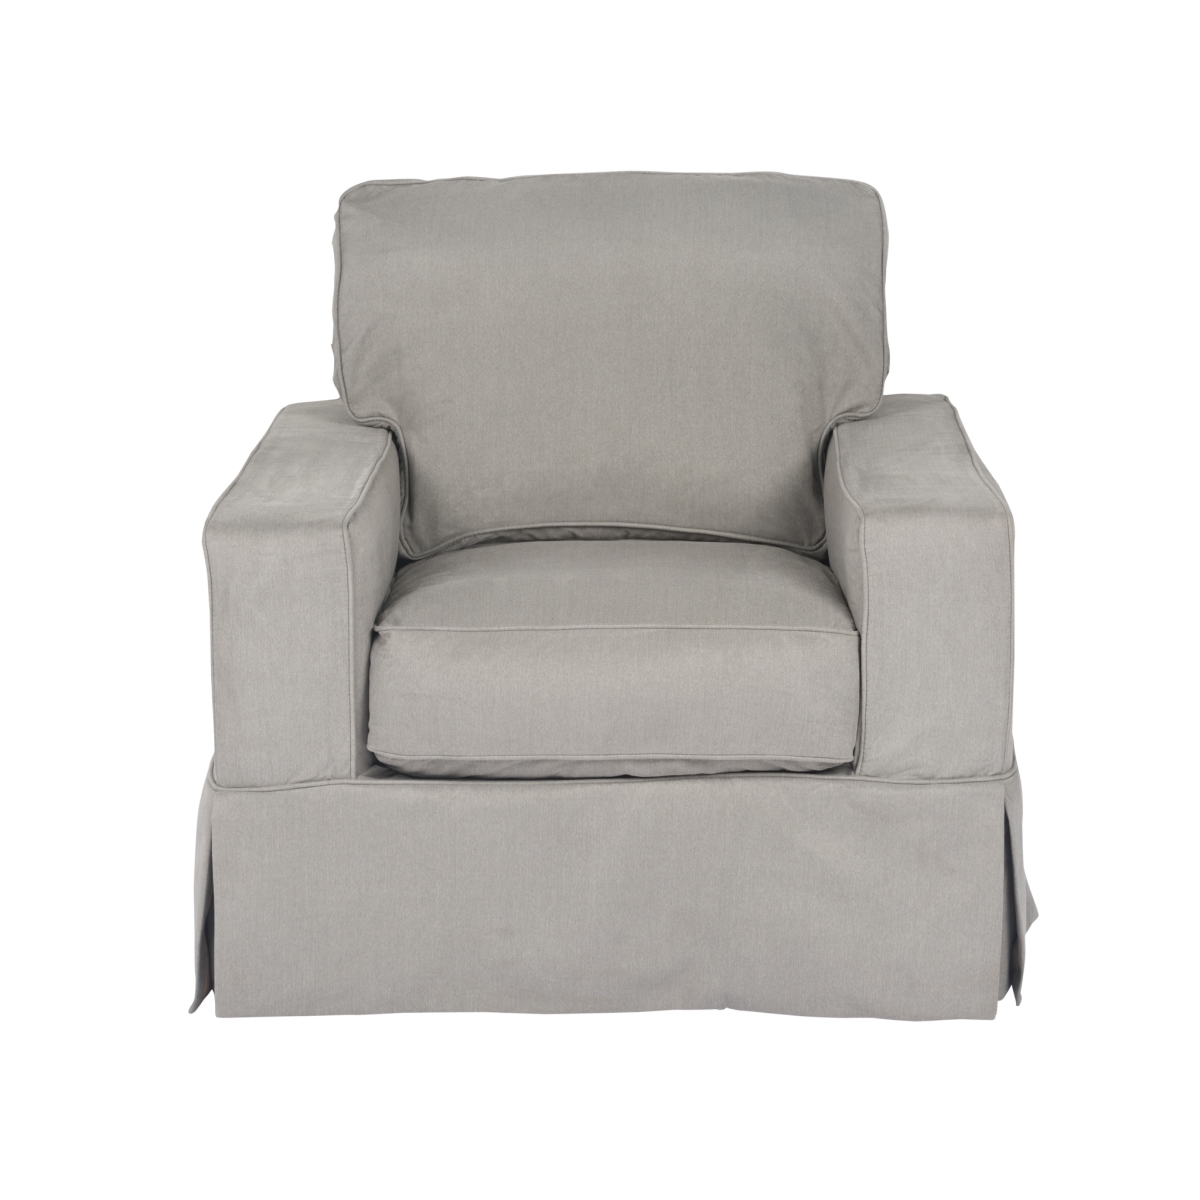 Su-108520-391094 Americana Slipcovered Chair, Peyton Slate